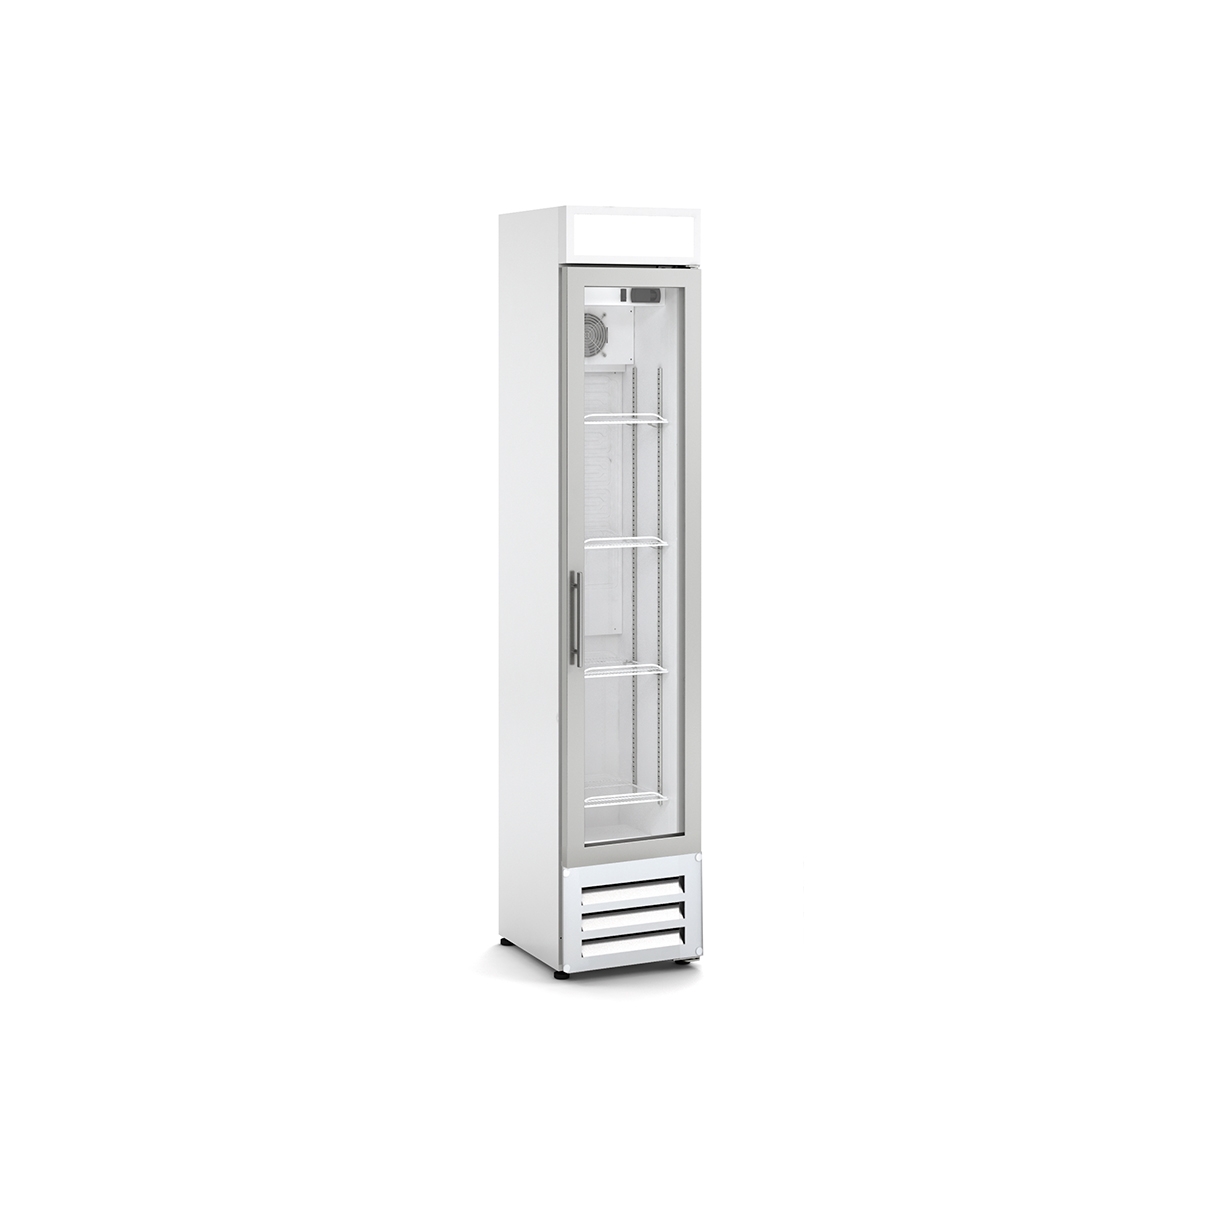 Vertical Refrigerated Display DECCVAR-13